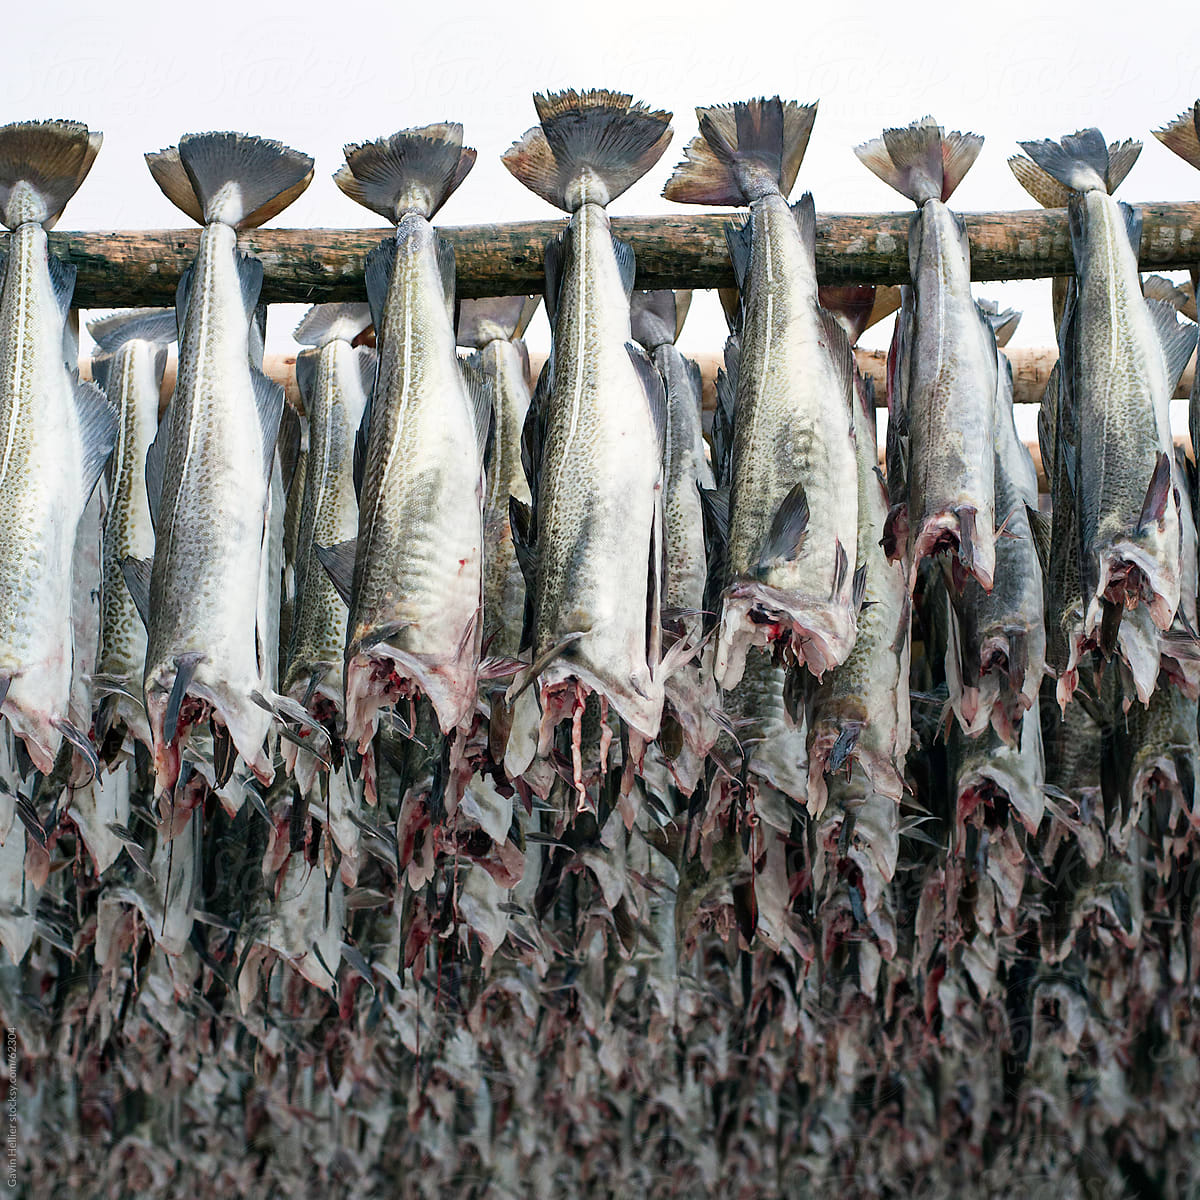 Stockfish (Cod) drying on wooden racks, Lofoten, Nordland, Norway, Scandinavia